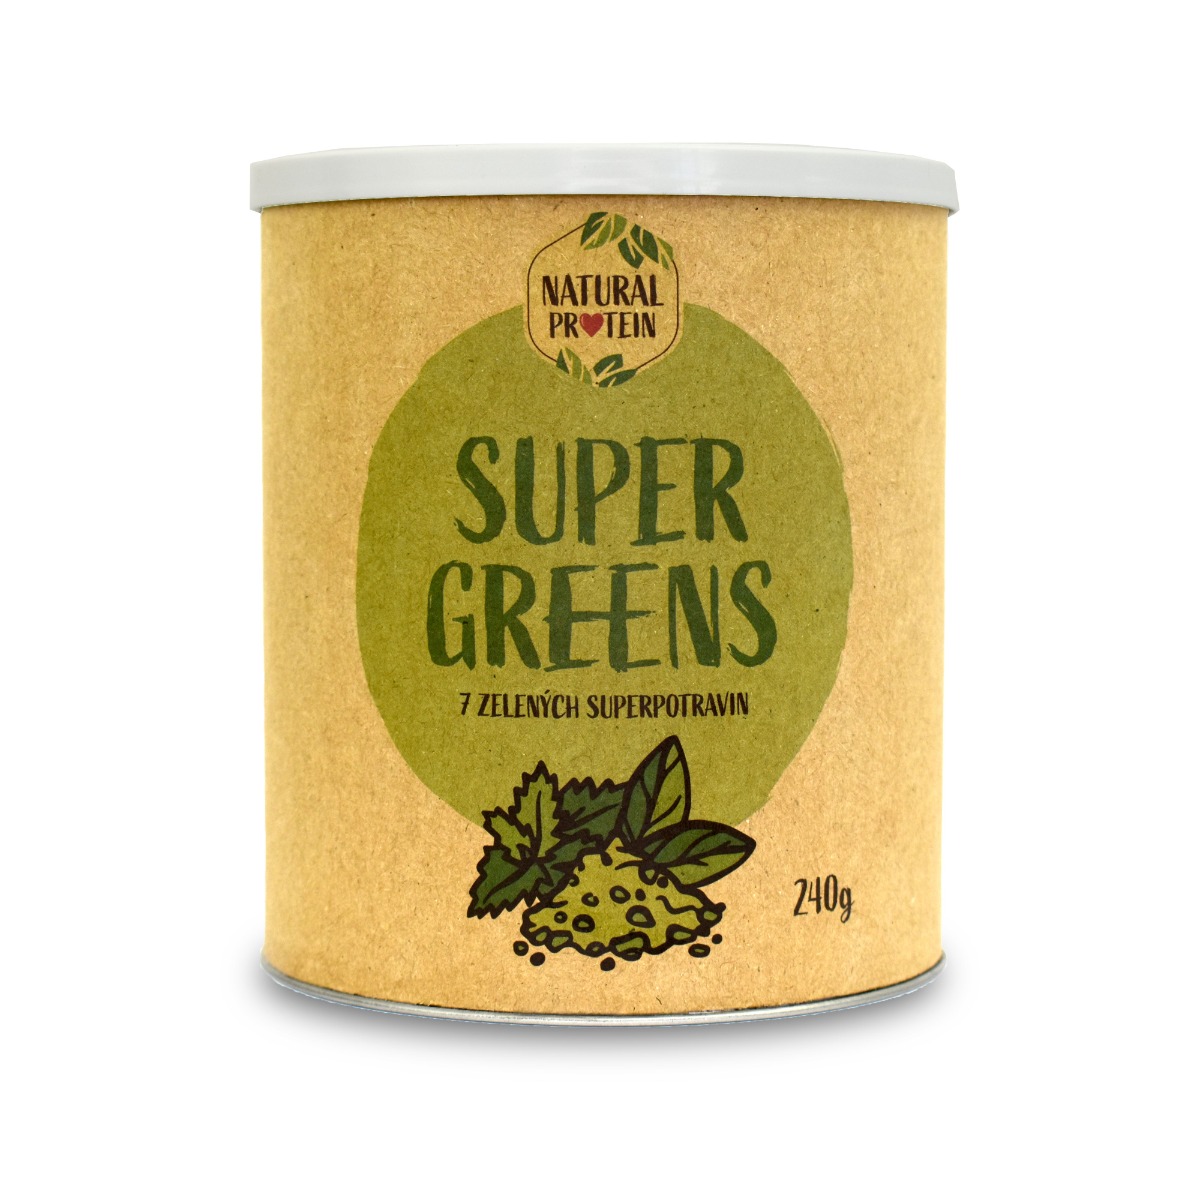 NaturalProtein Super greens 240 g NaturalProtein